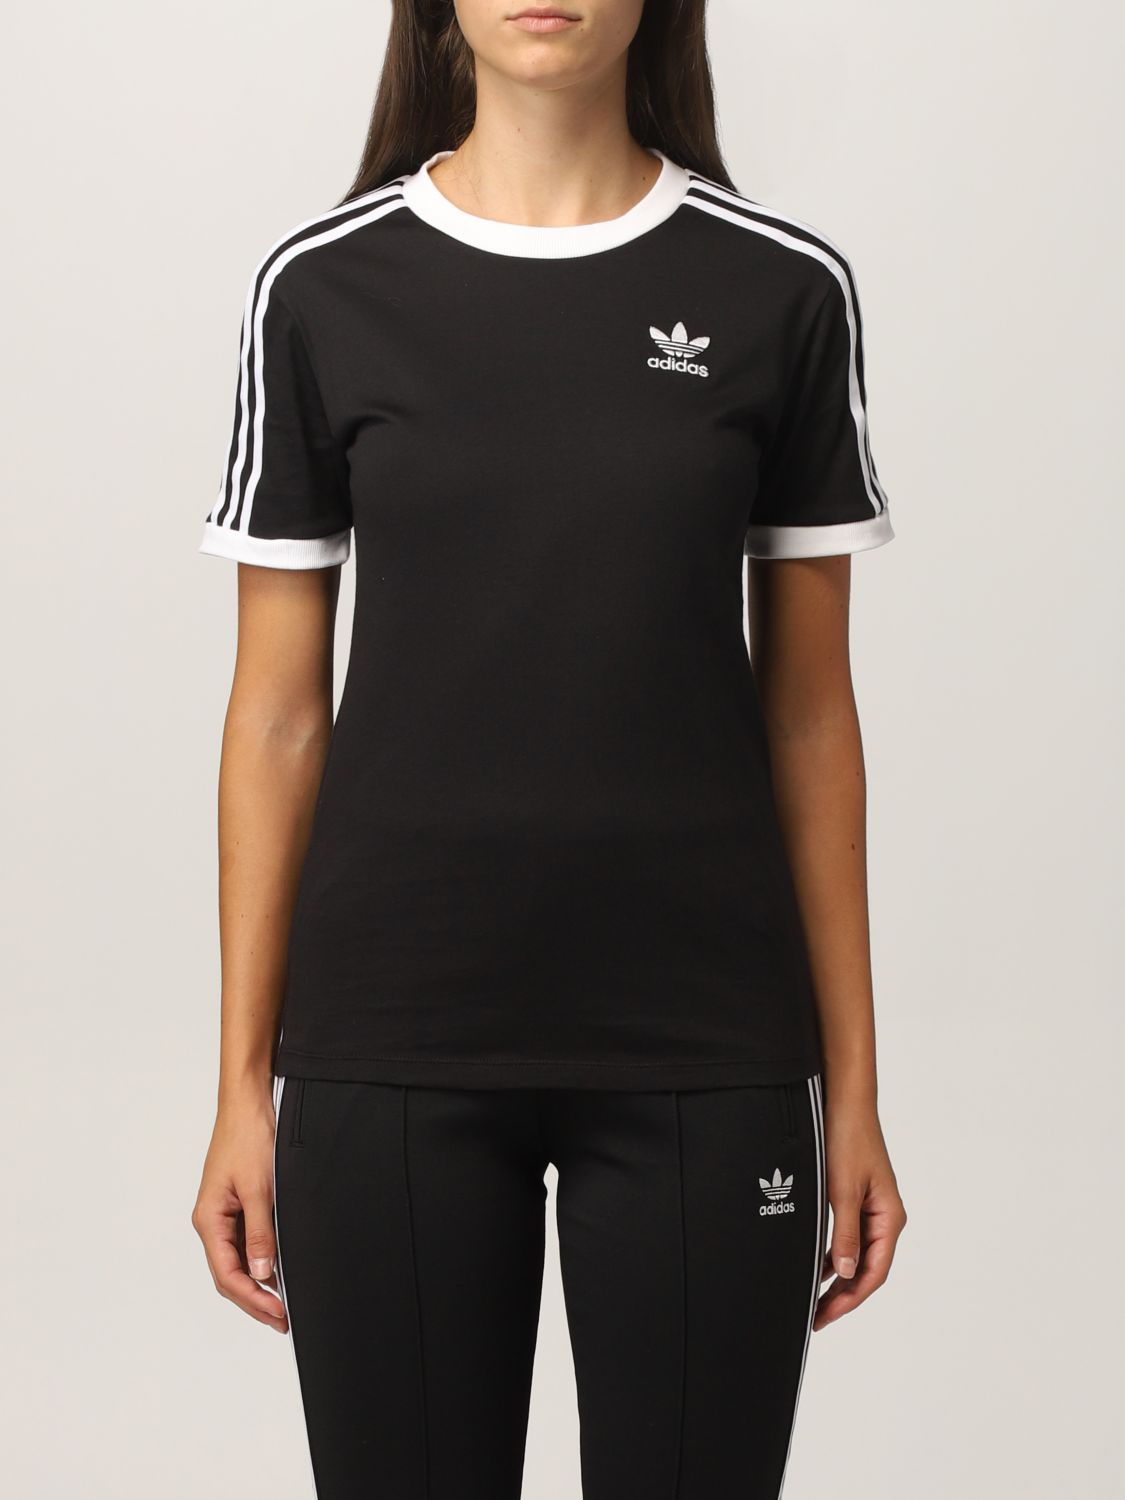 ADIDAS ORIGINALS: for woman - Black | Adidas t-shirt GN2900 online on GIGLIO.COM